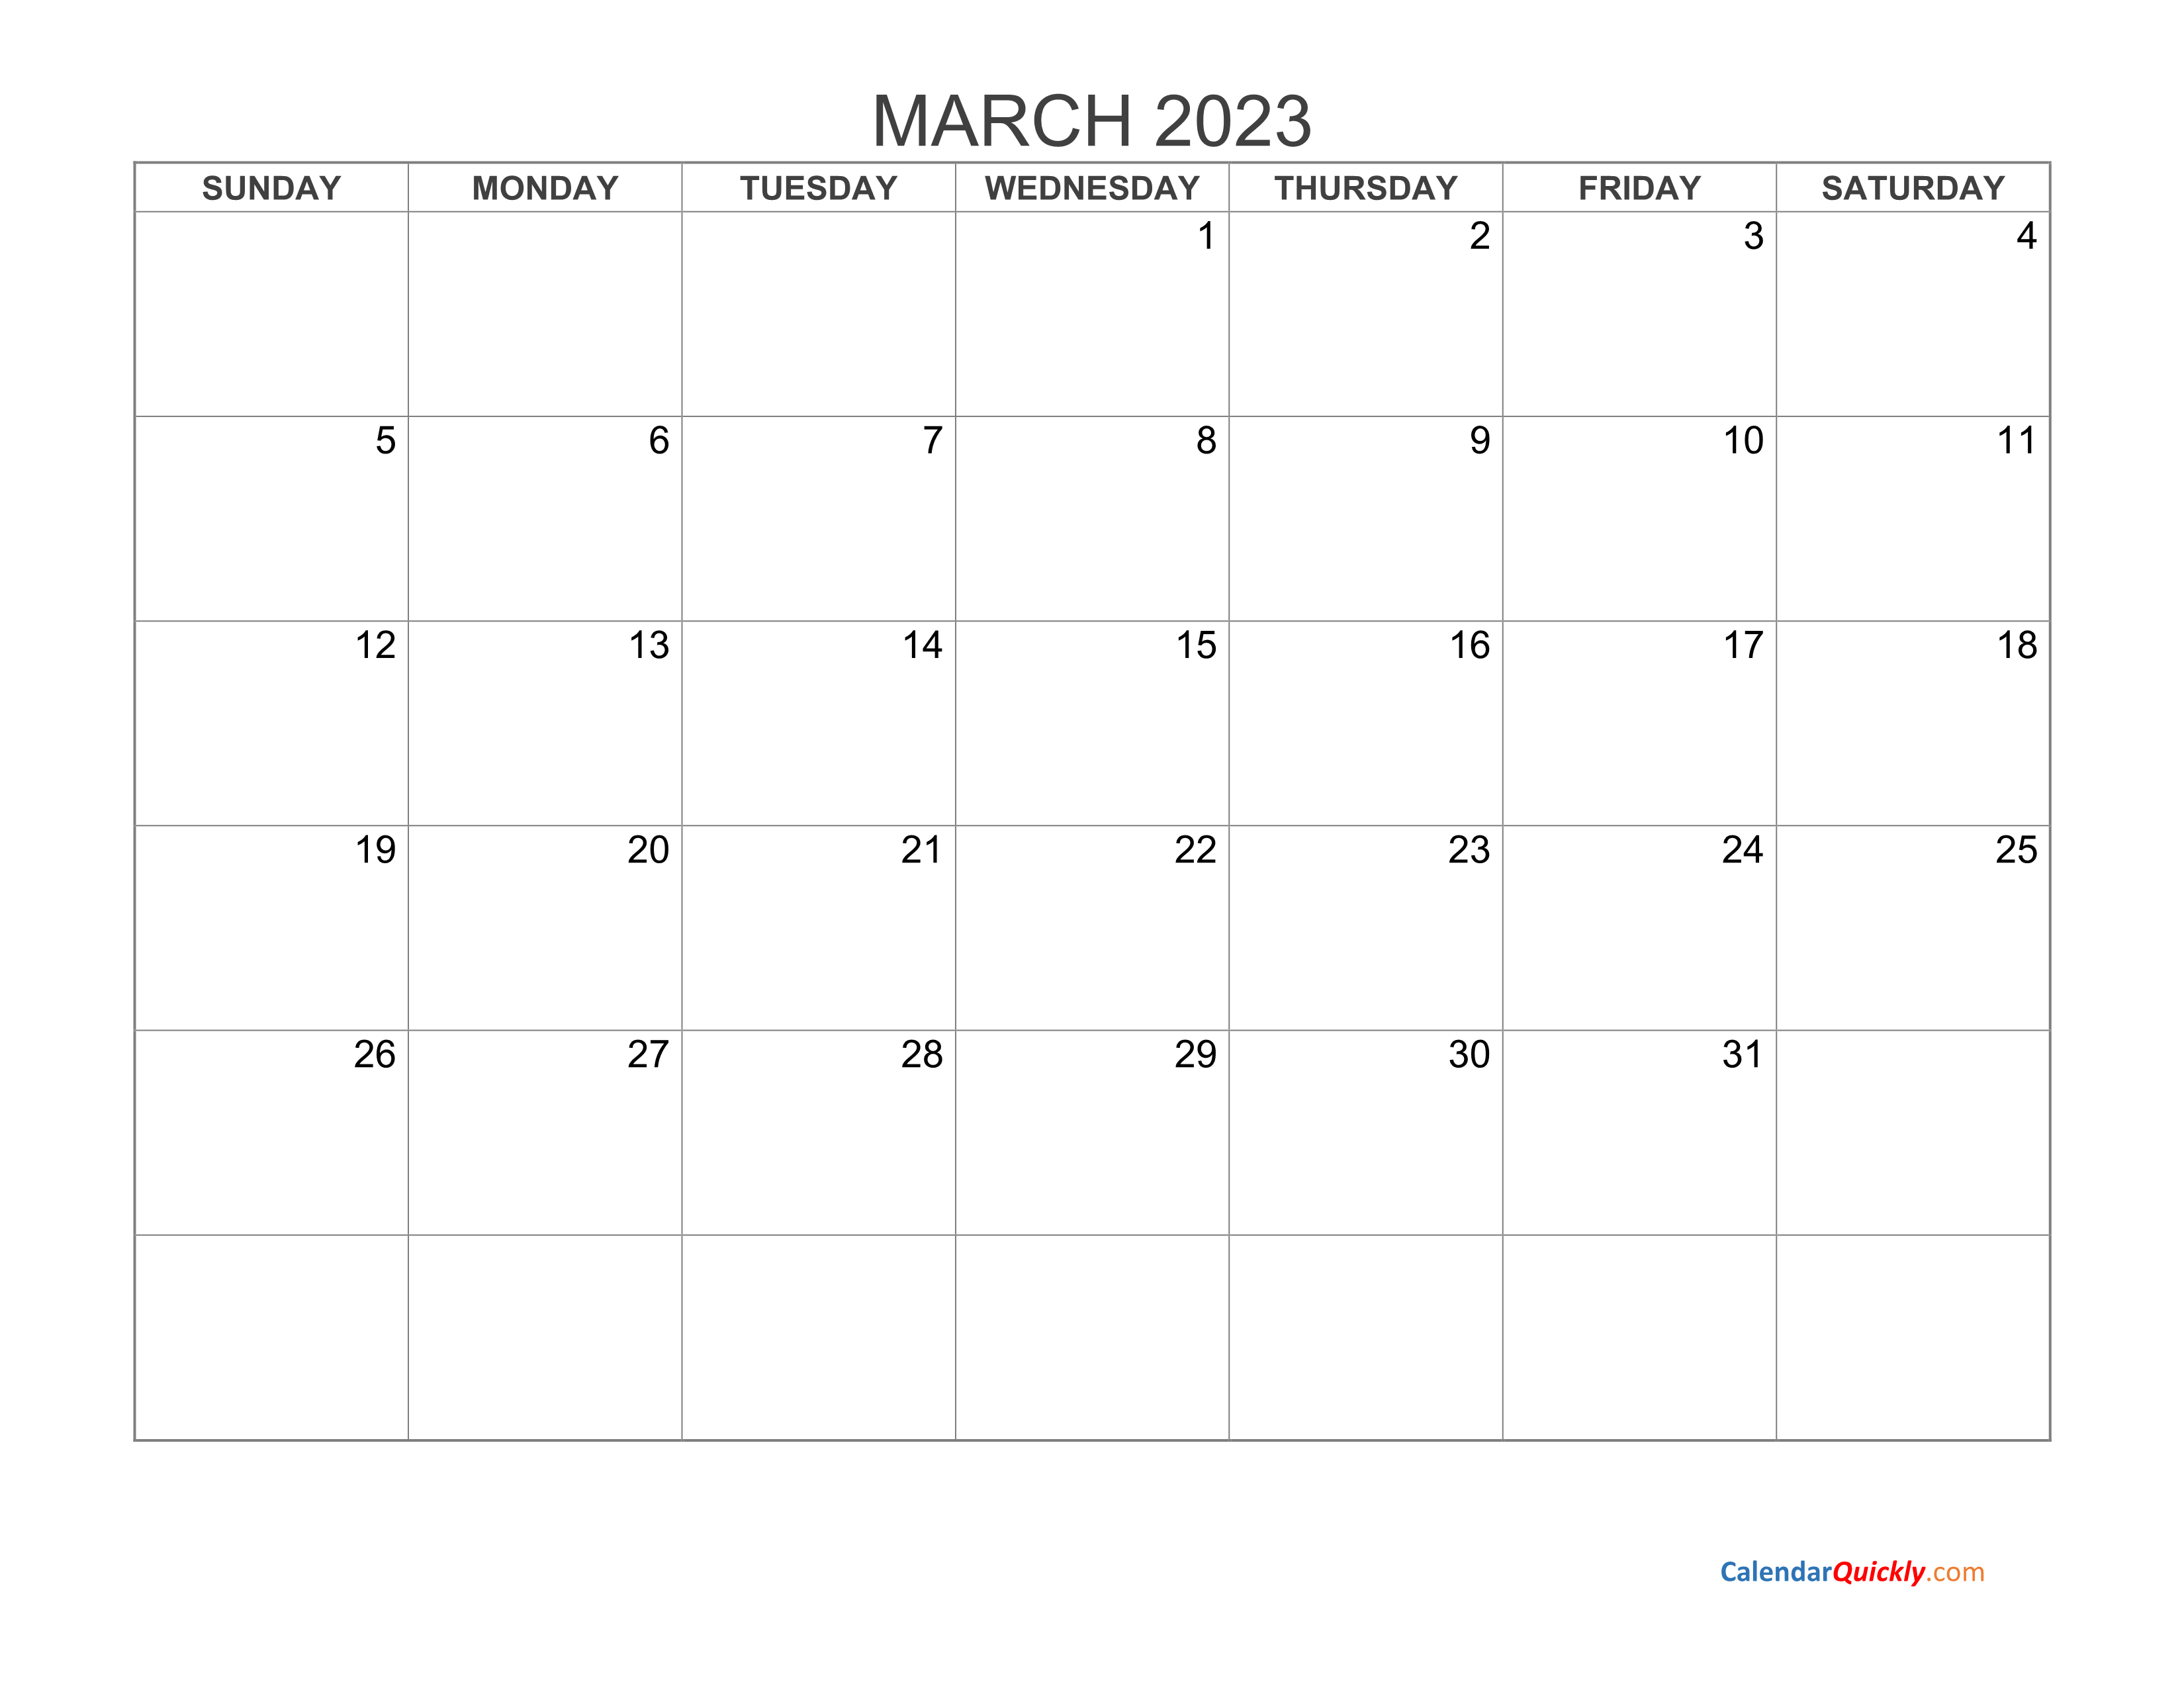 march-2023-blank-calendar-calendar-quickly